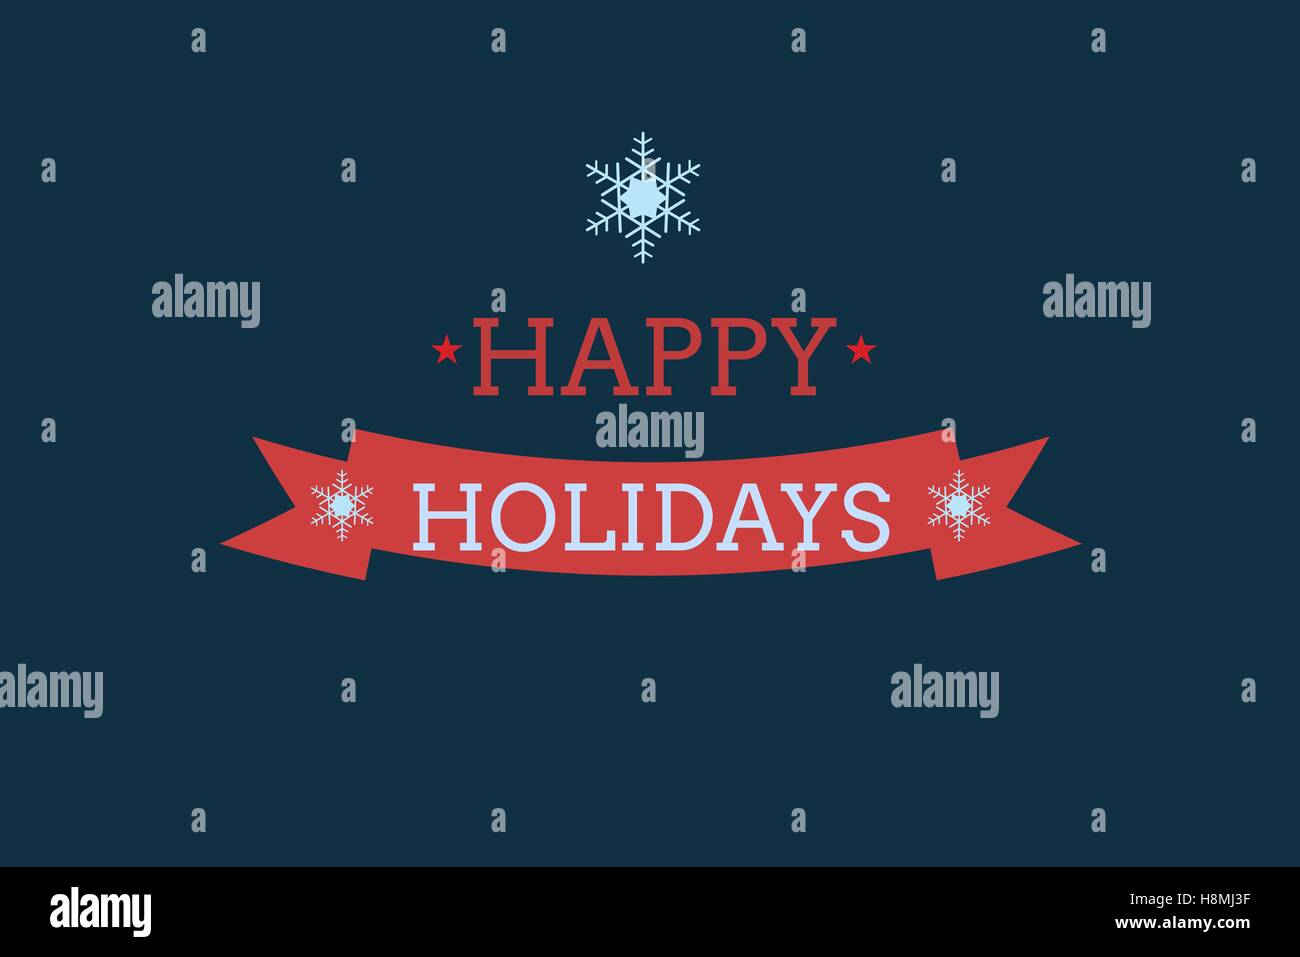 Christmas Message on Black Background Design Stock Photo